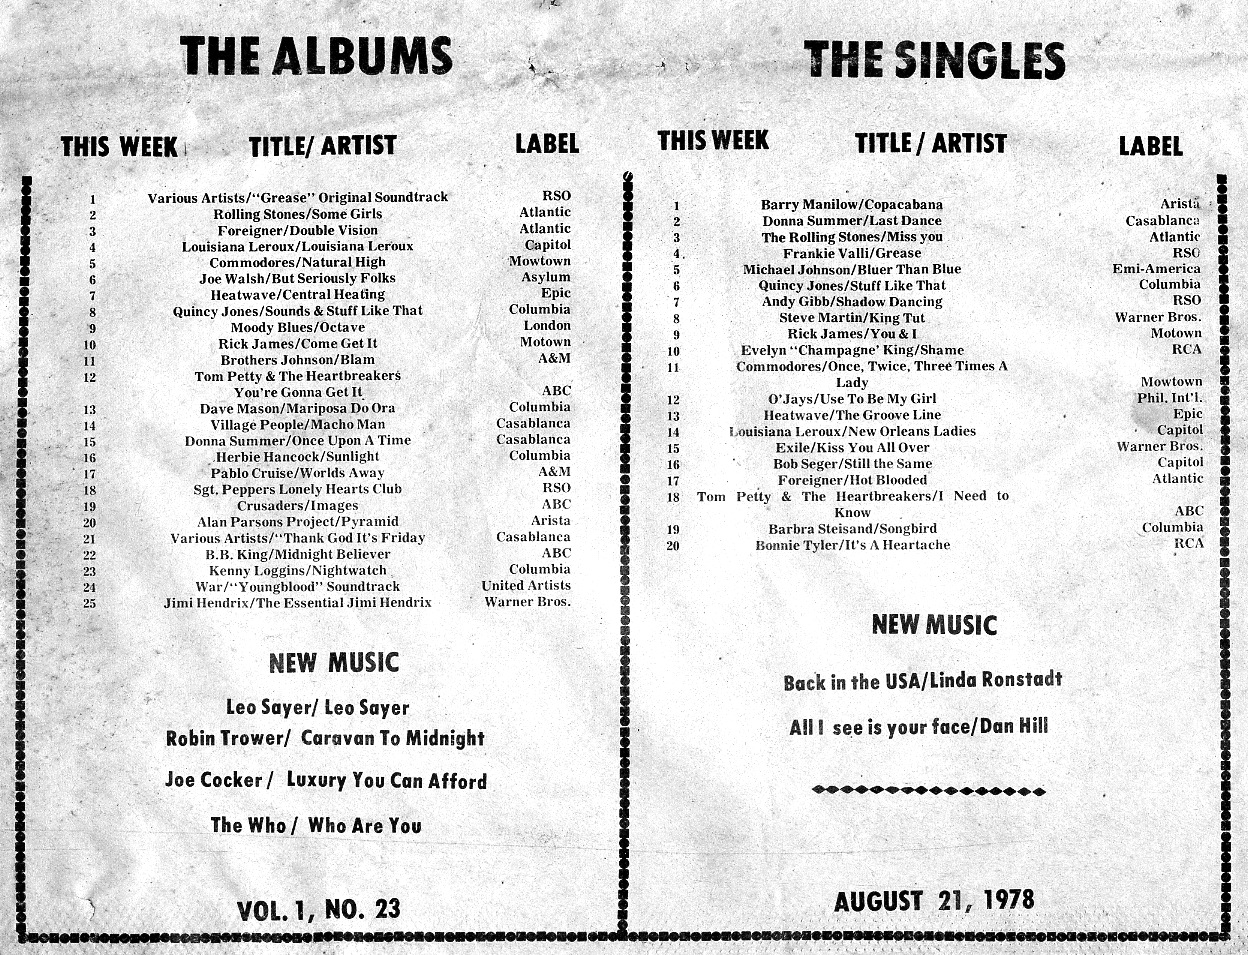 WNOE-FM Music Chart 8/21/78